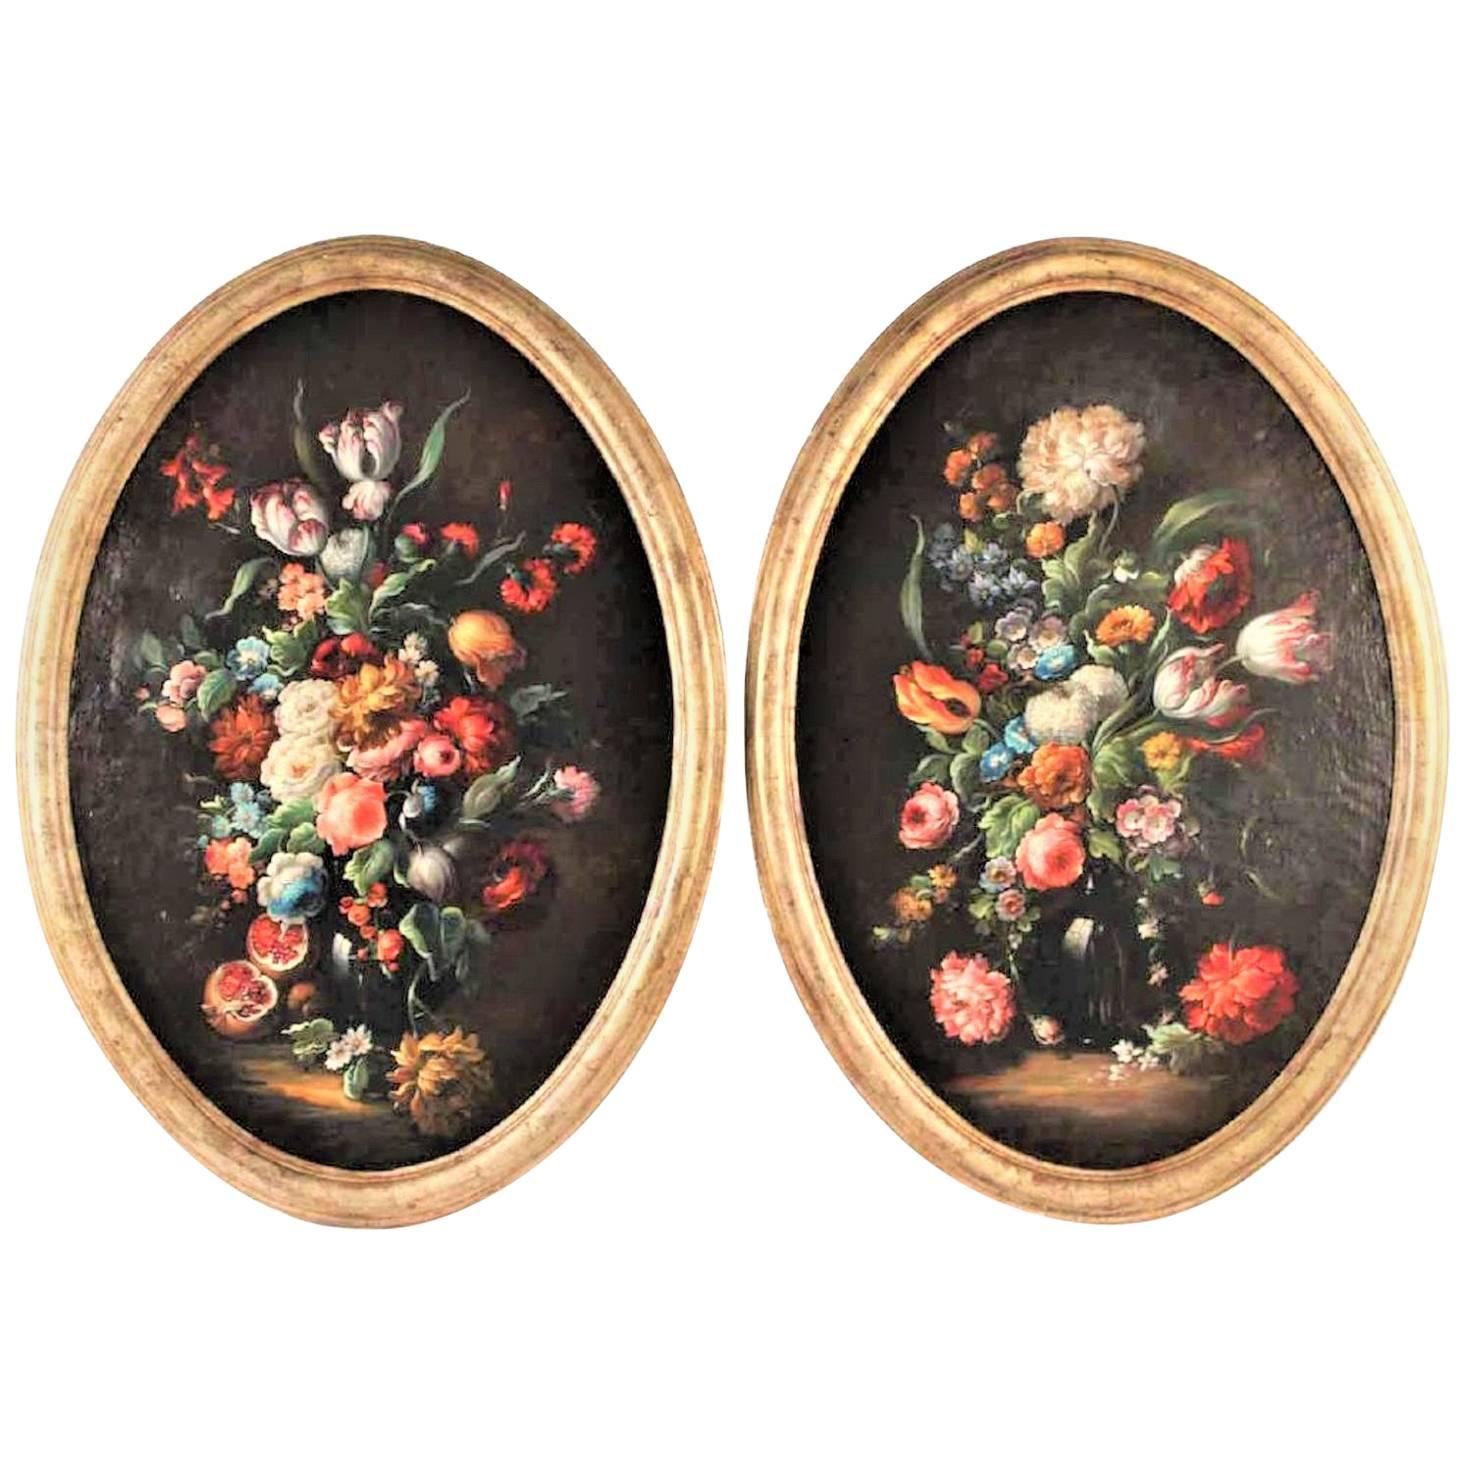 Pair of Large Antique Gilt Oval Framed on Canvas Floral Still Lifes